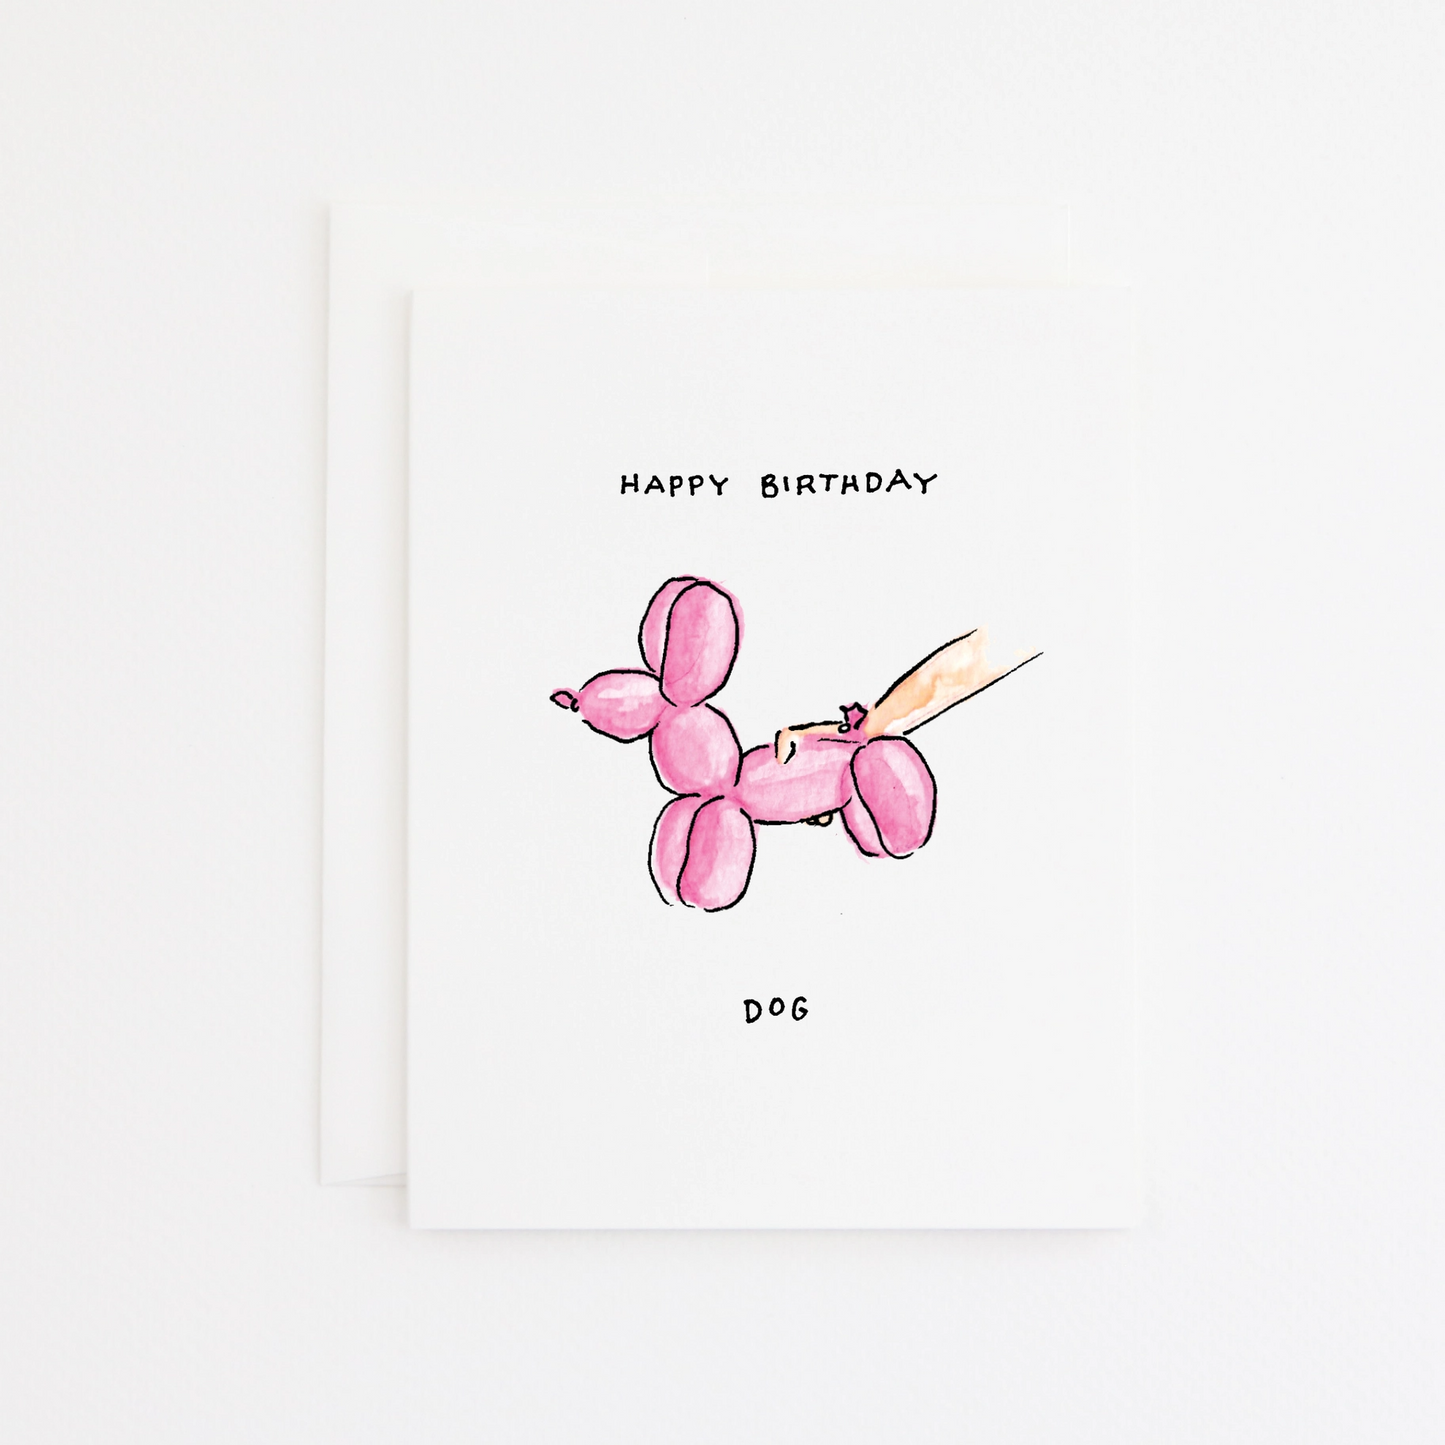 Happy Birthday Balloon Dog - Greeting Card - Mellow Monkey